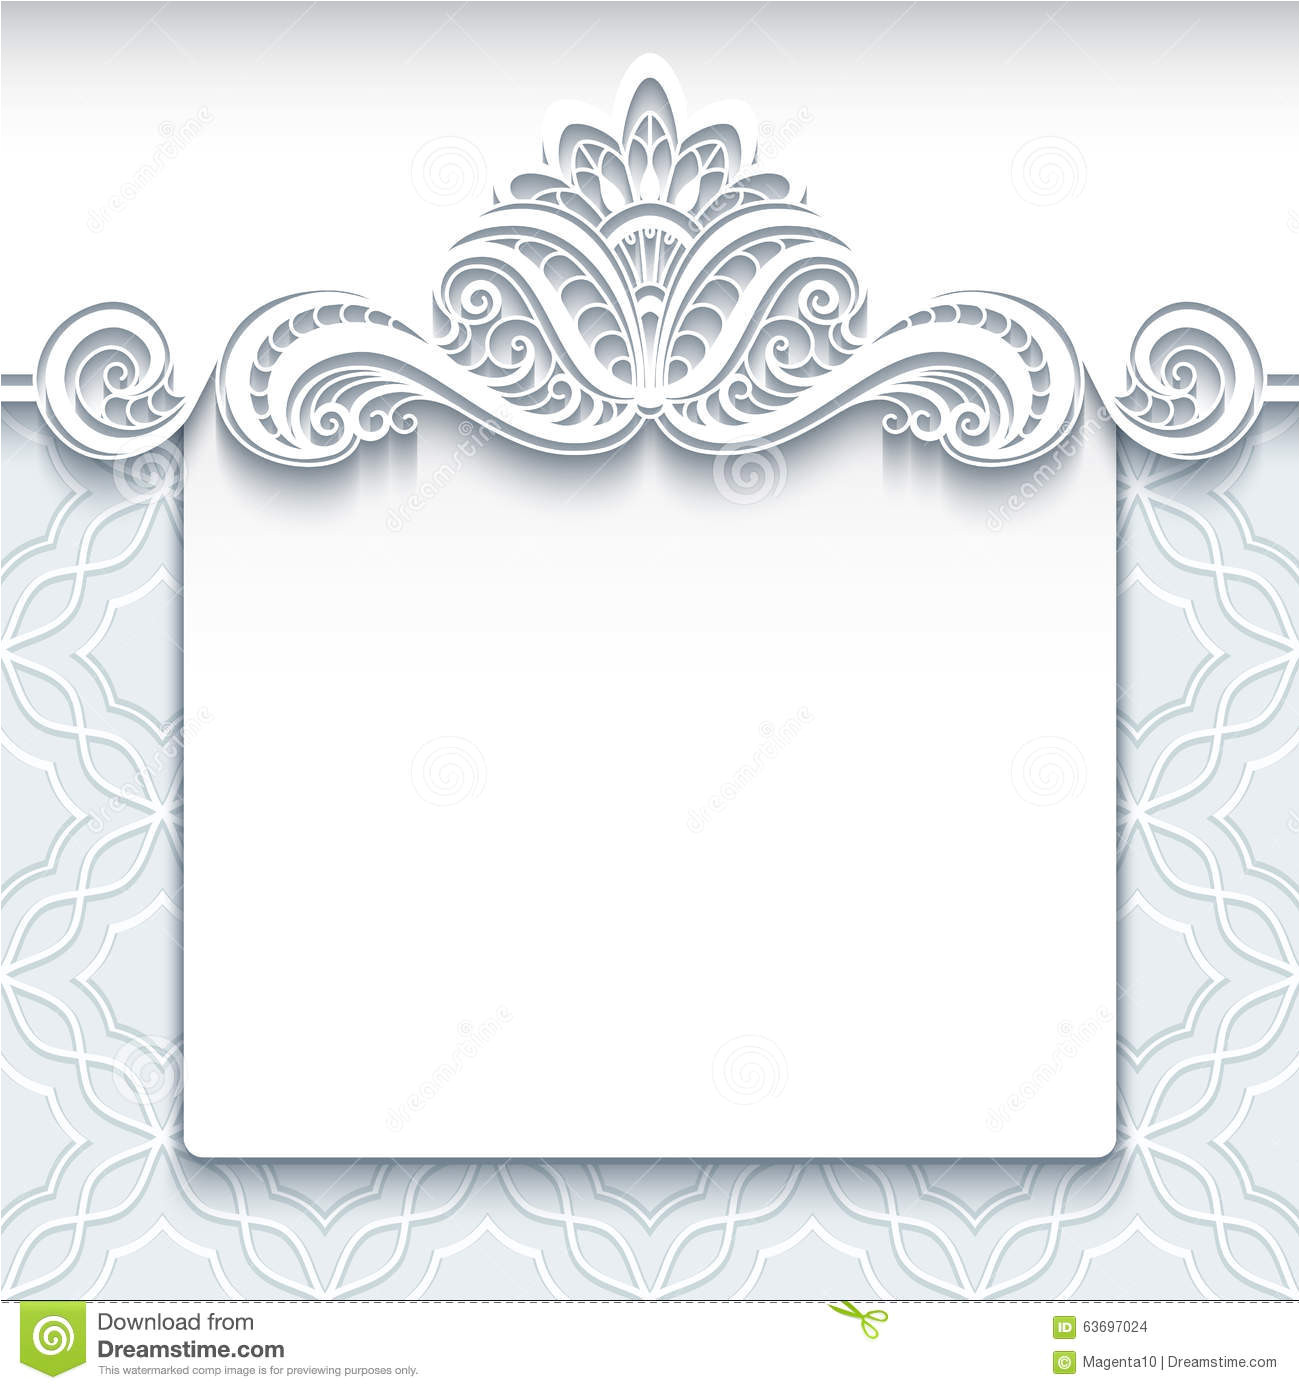 stock illustration white lace background wedding invitation template elegant neutral color save date card decorative pattern image63697024